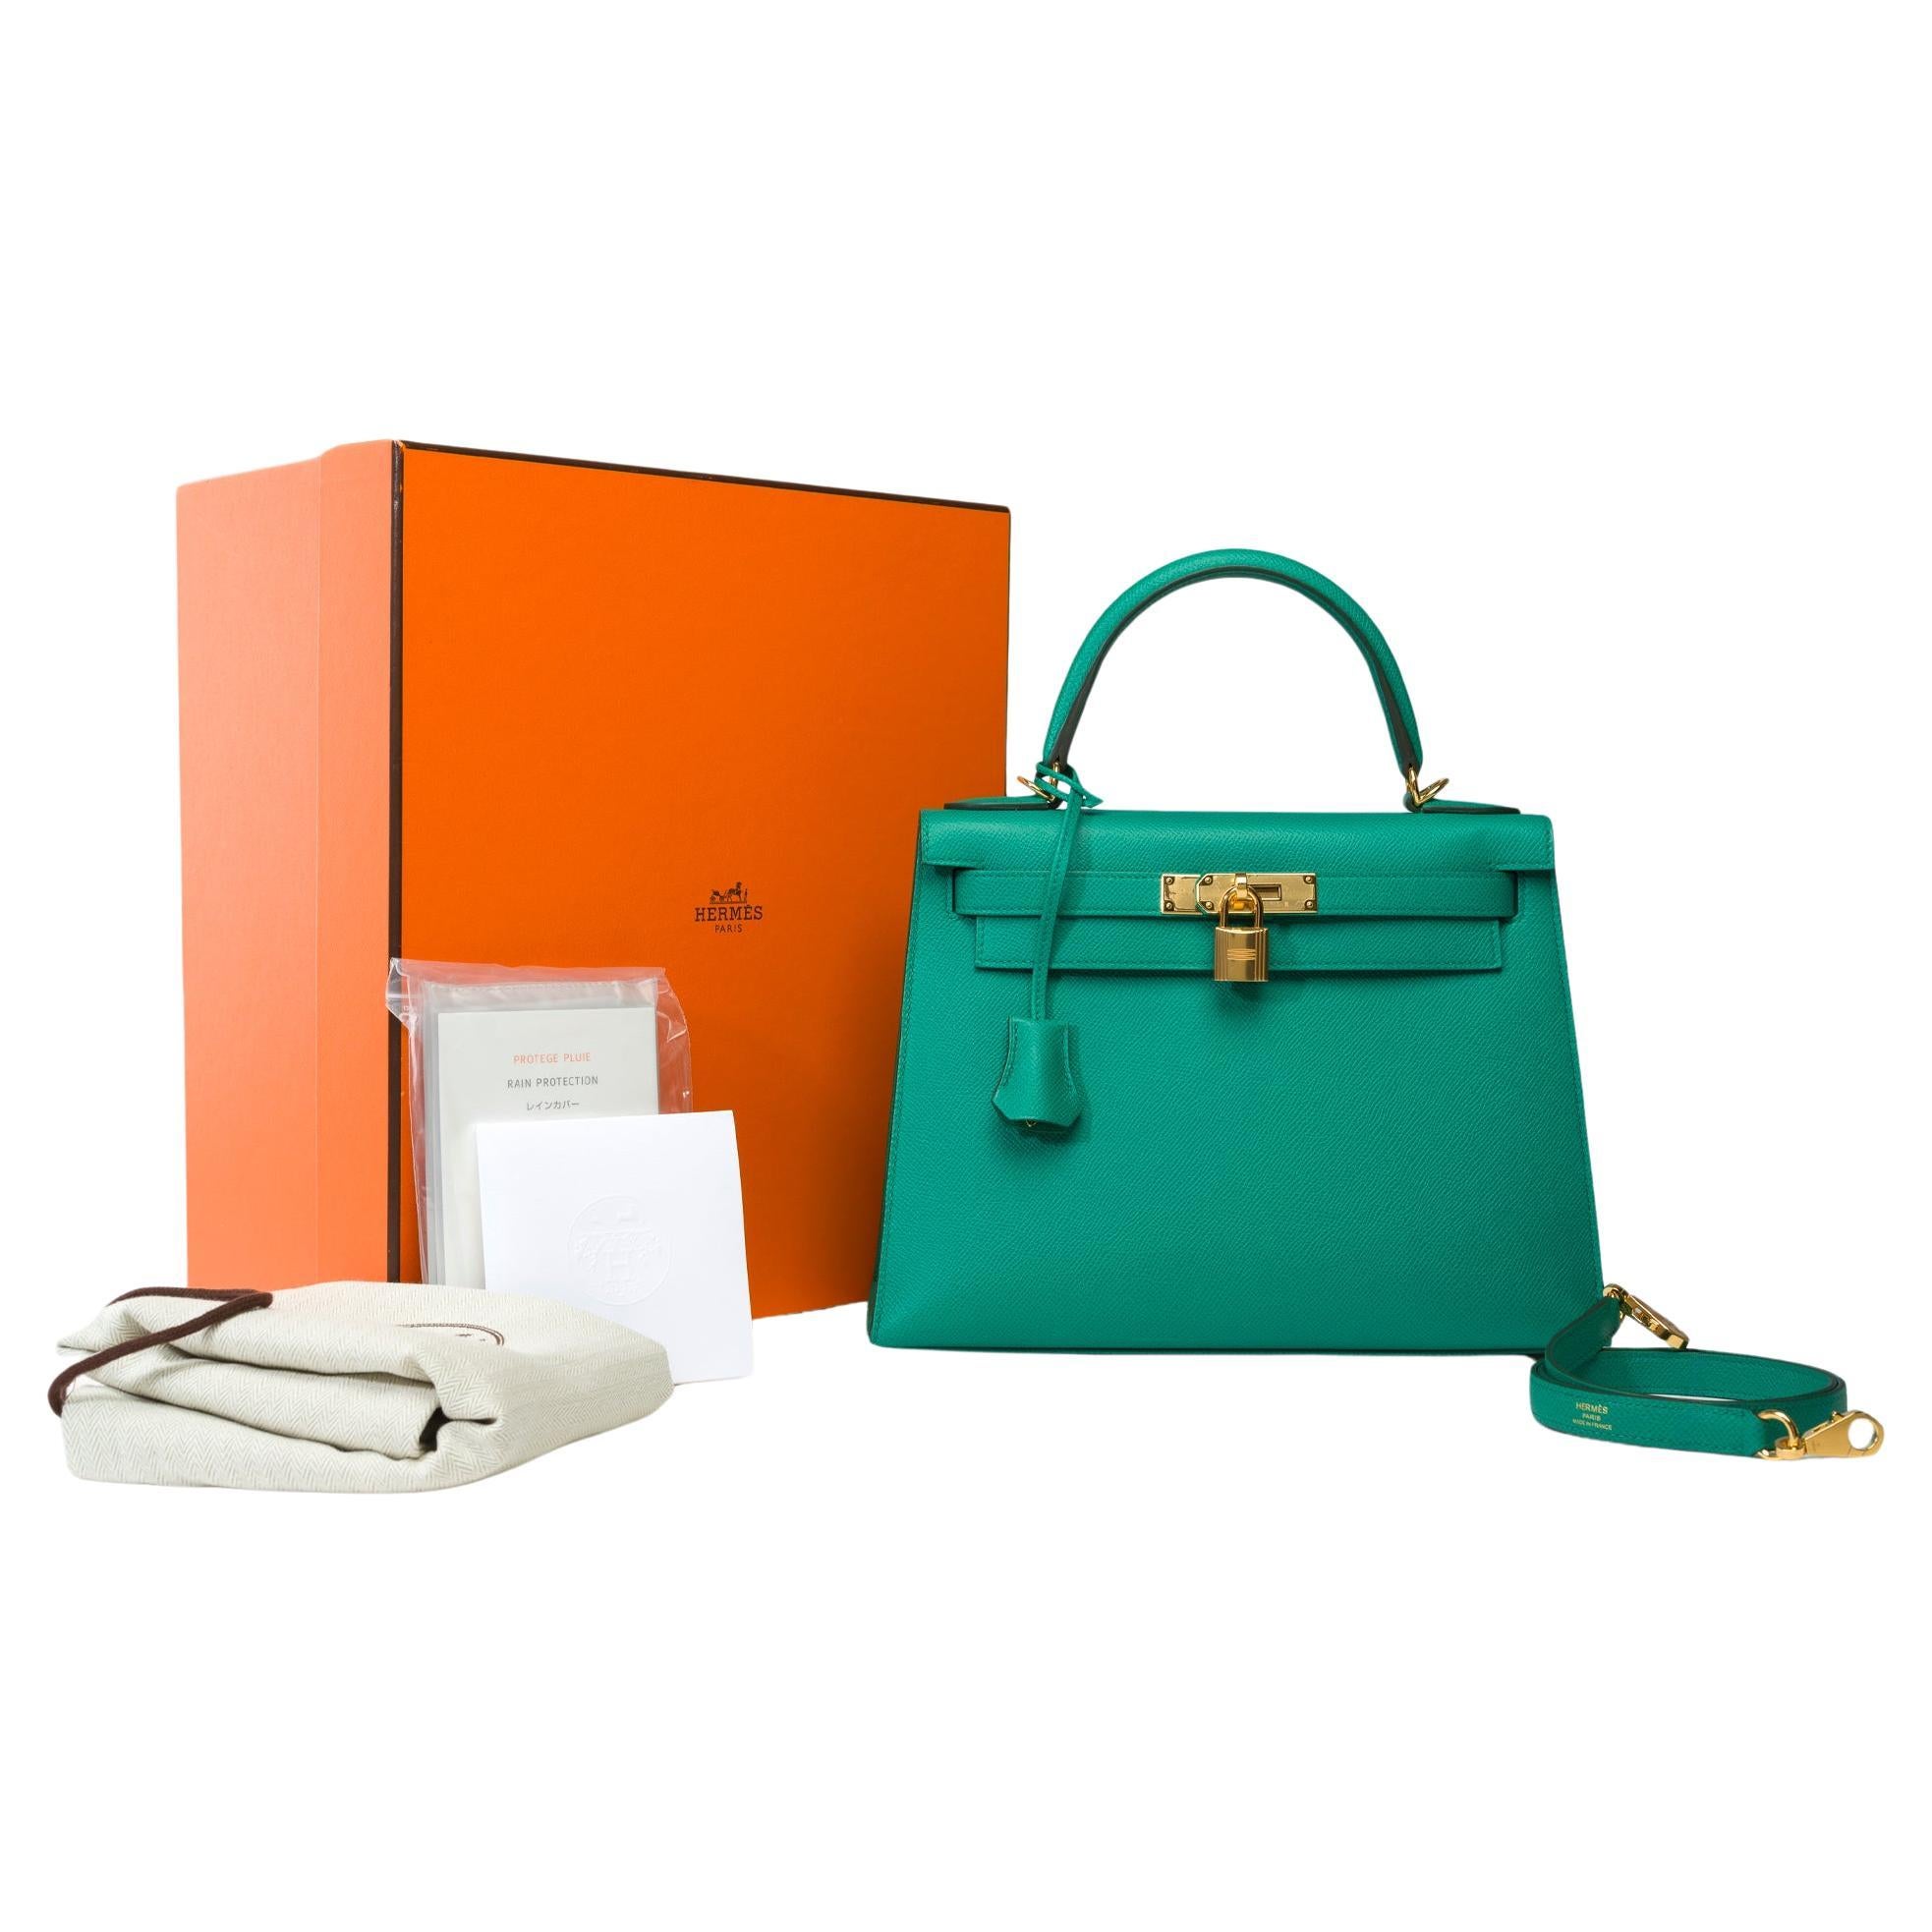 New Hermès Kelly 28 sellier handbag strap in Vert Jade Epsom leather, GHW For Sale